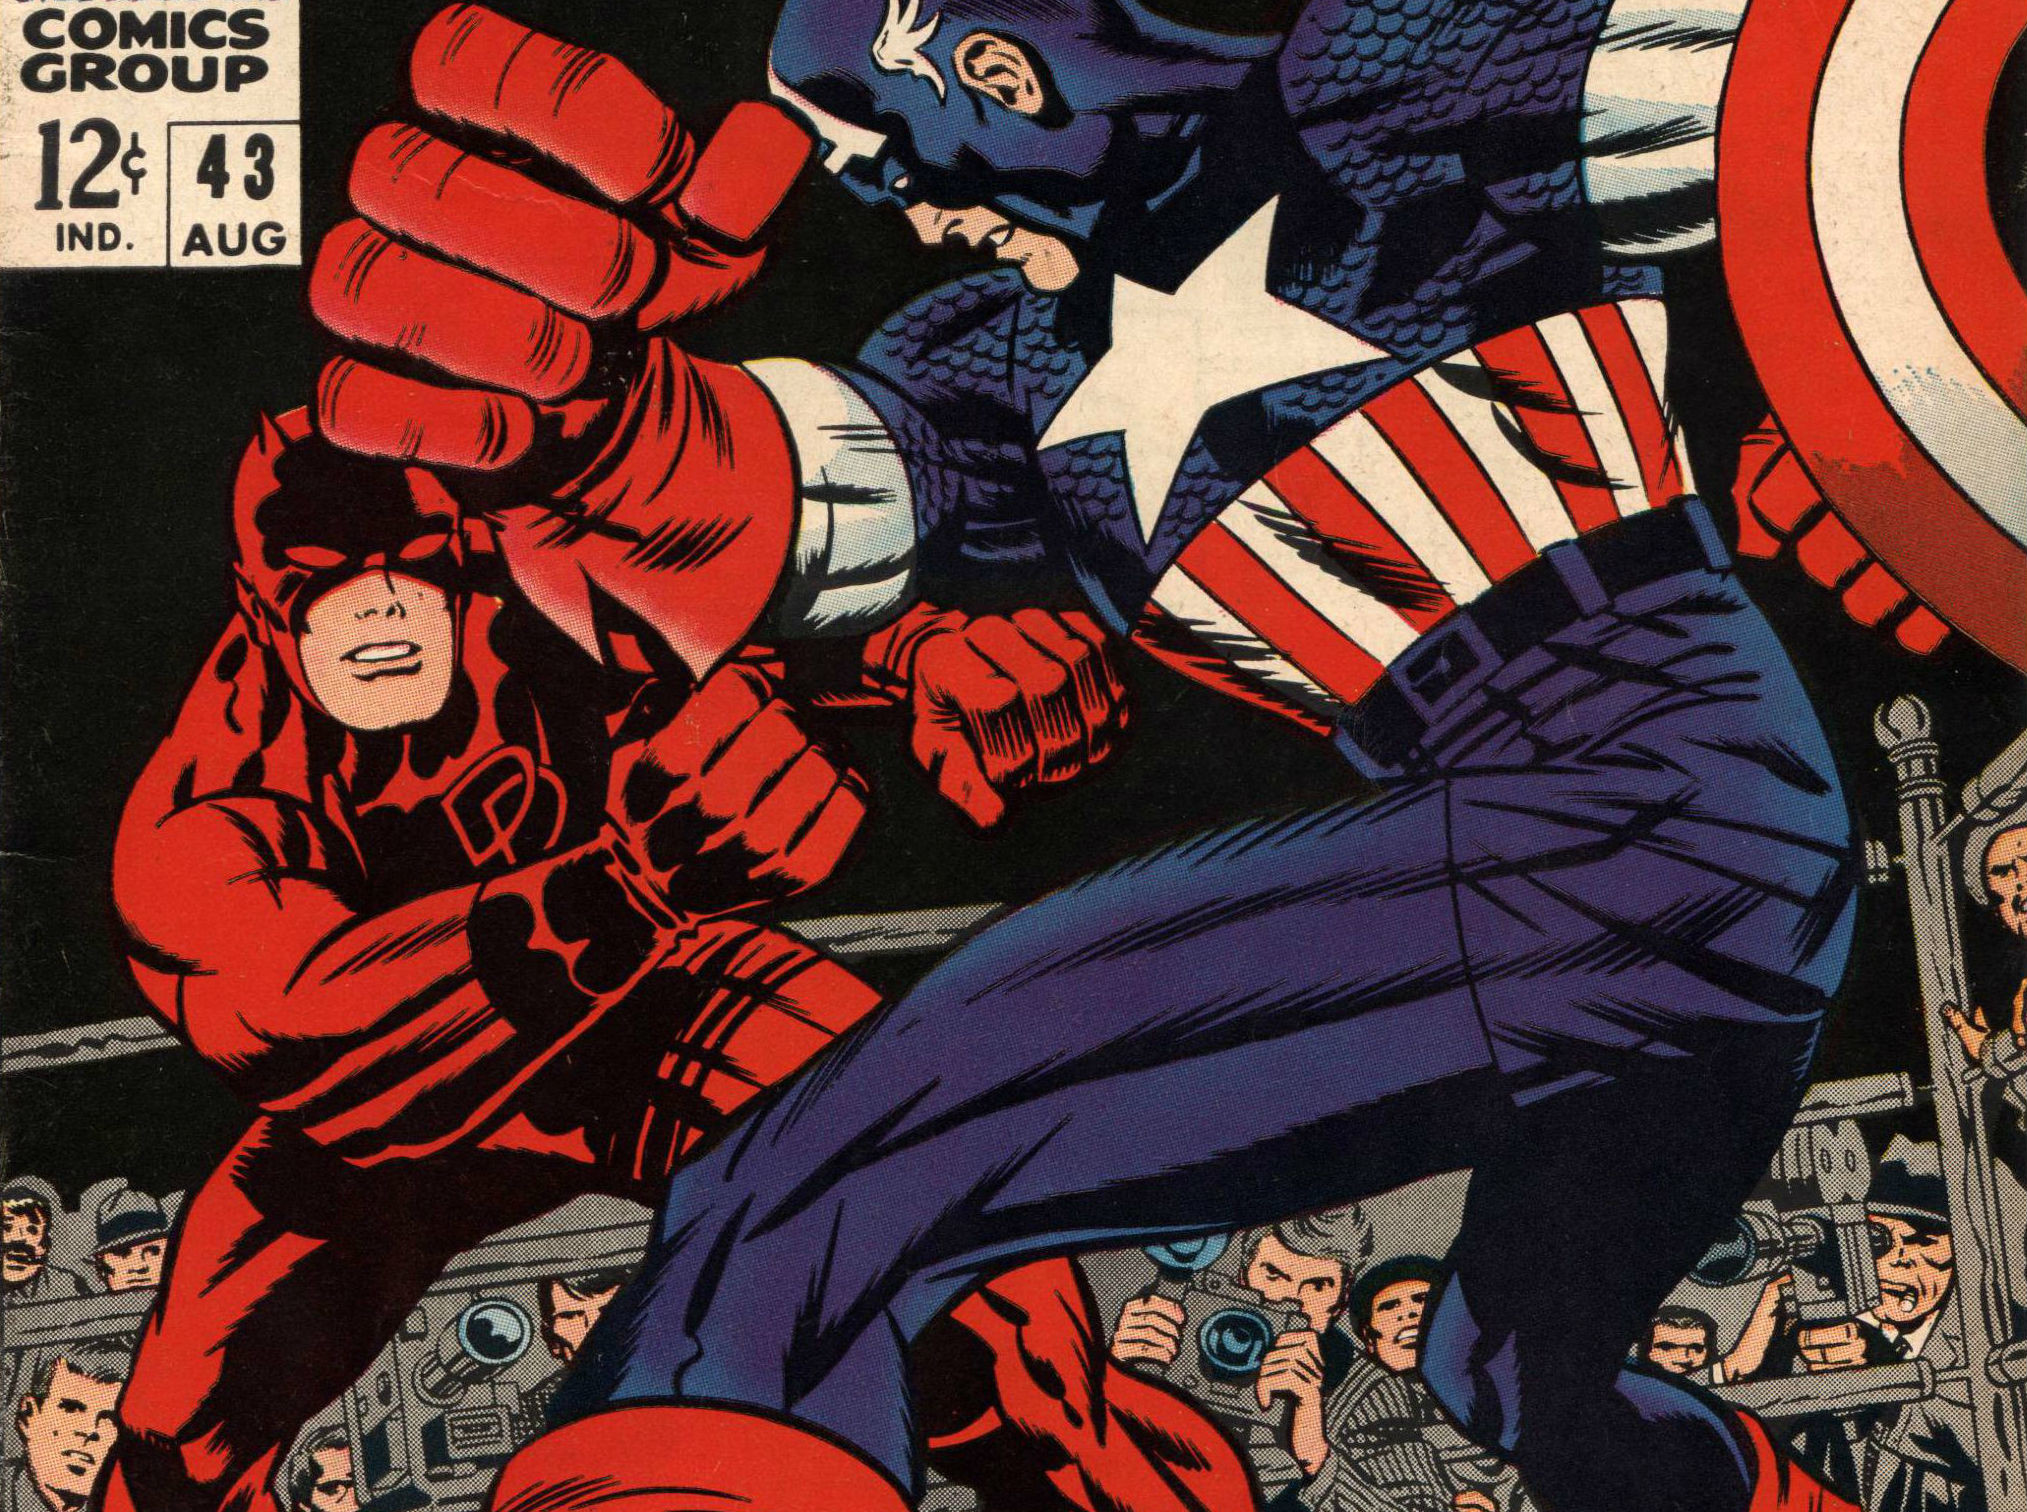 DAREDEVIL marvel superhero captain america fs wallpaper 138235 WallpaperUP